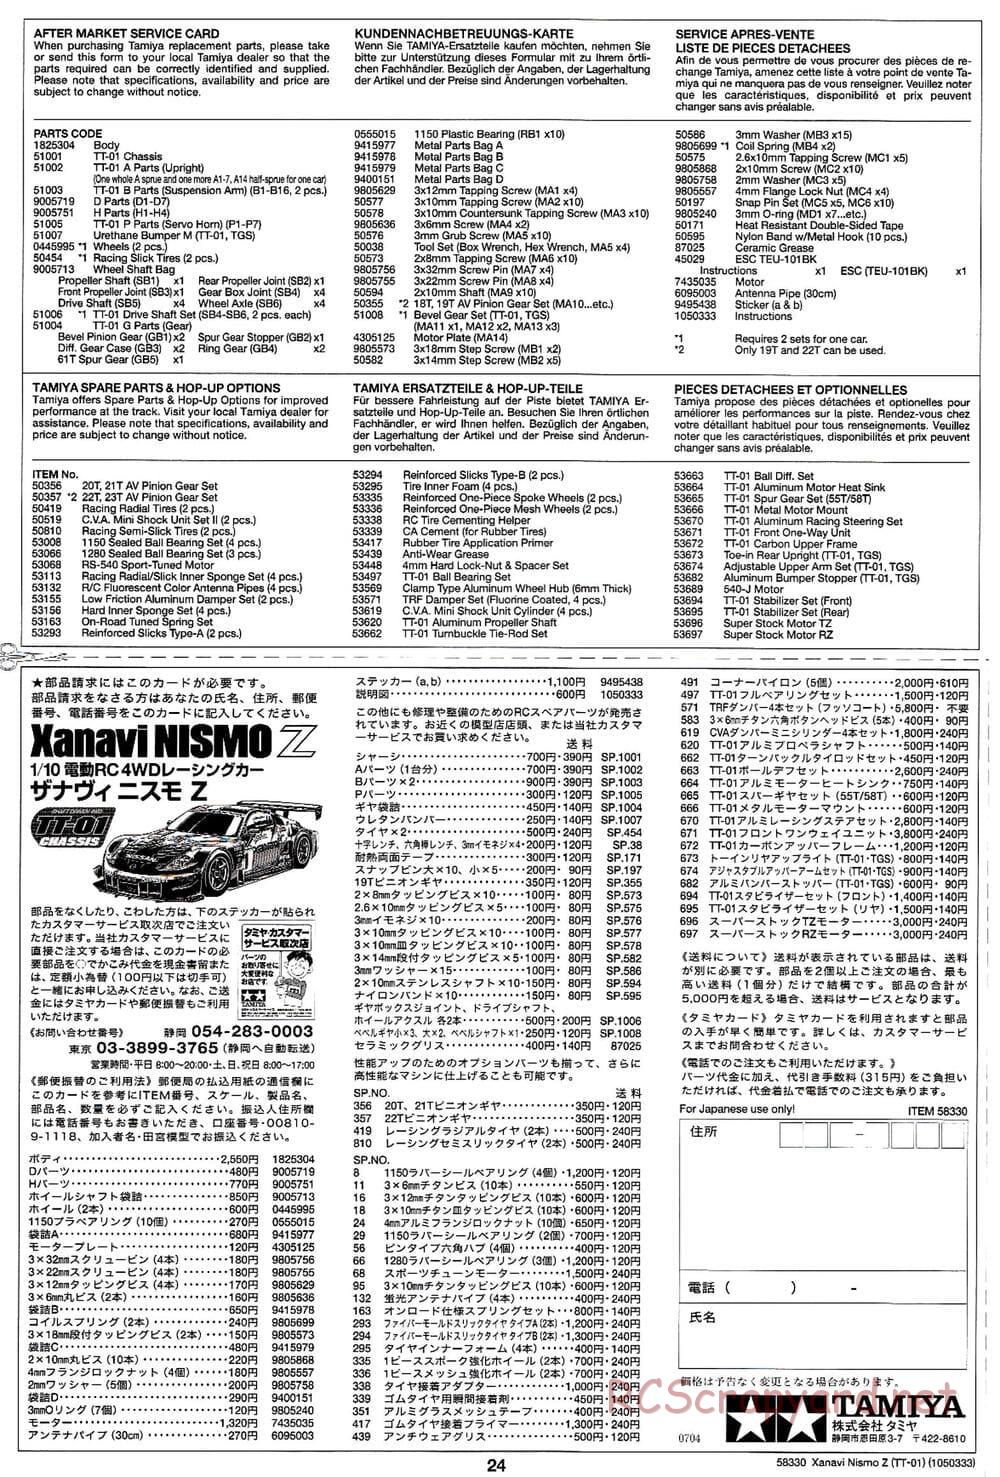 Tamiya - Xanavi Nismo Z - TT-01 Chassis - Manual - Page 24